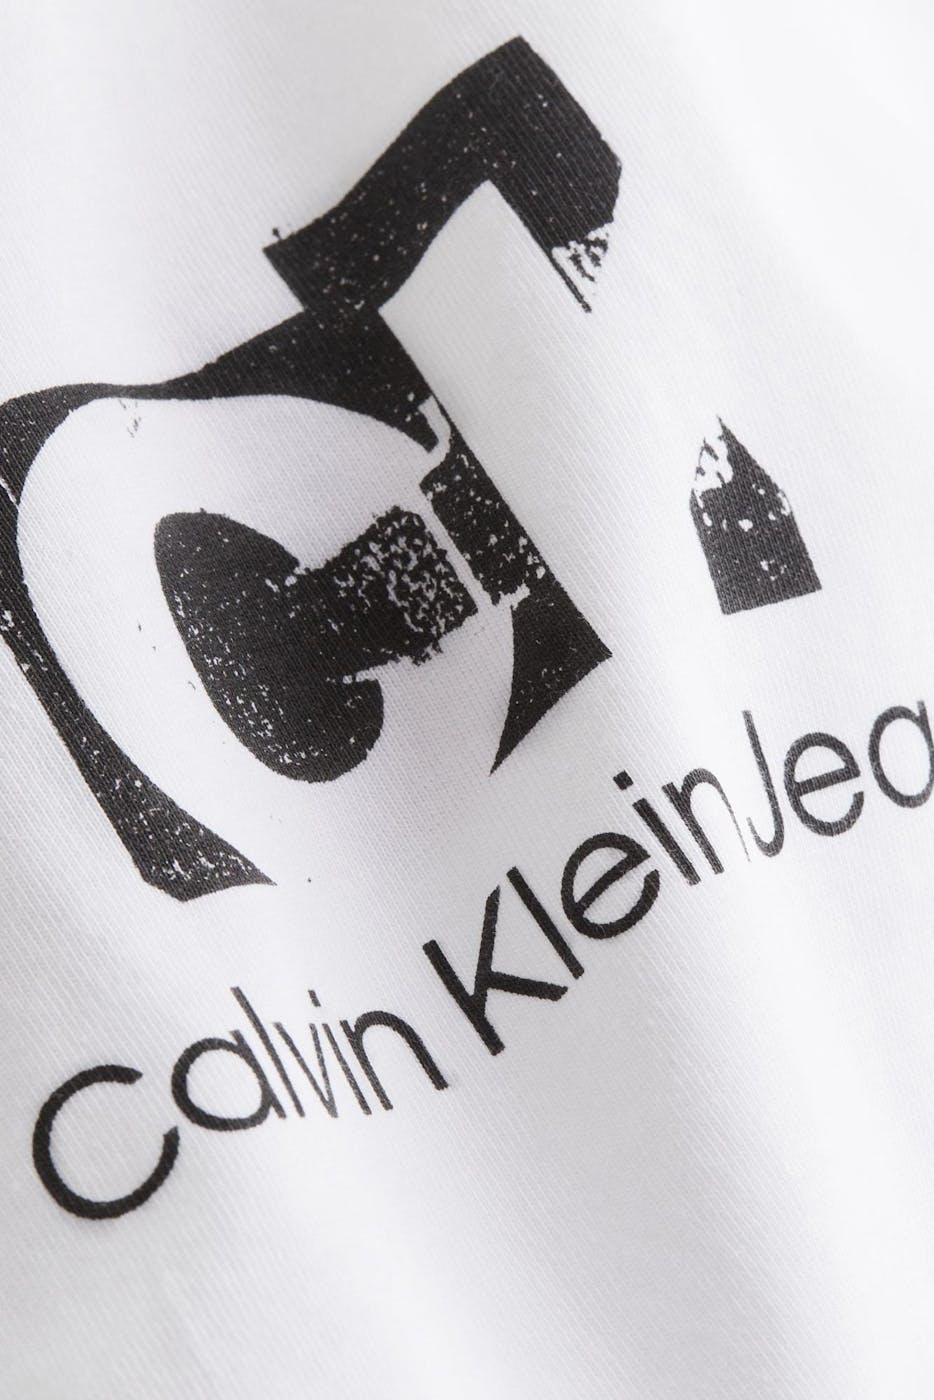 Calvin Klein Jeans - Witte CK Vlak Rug T-shirt